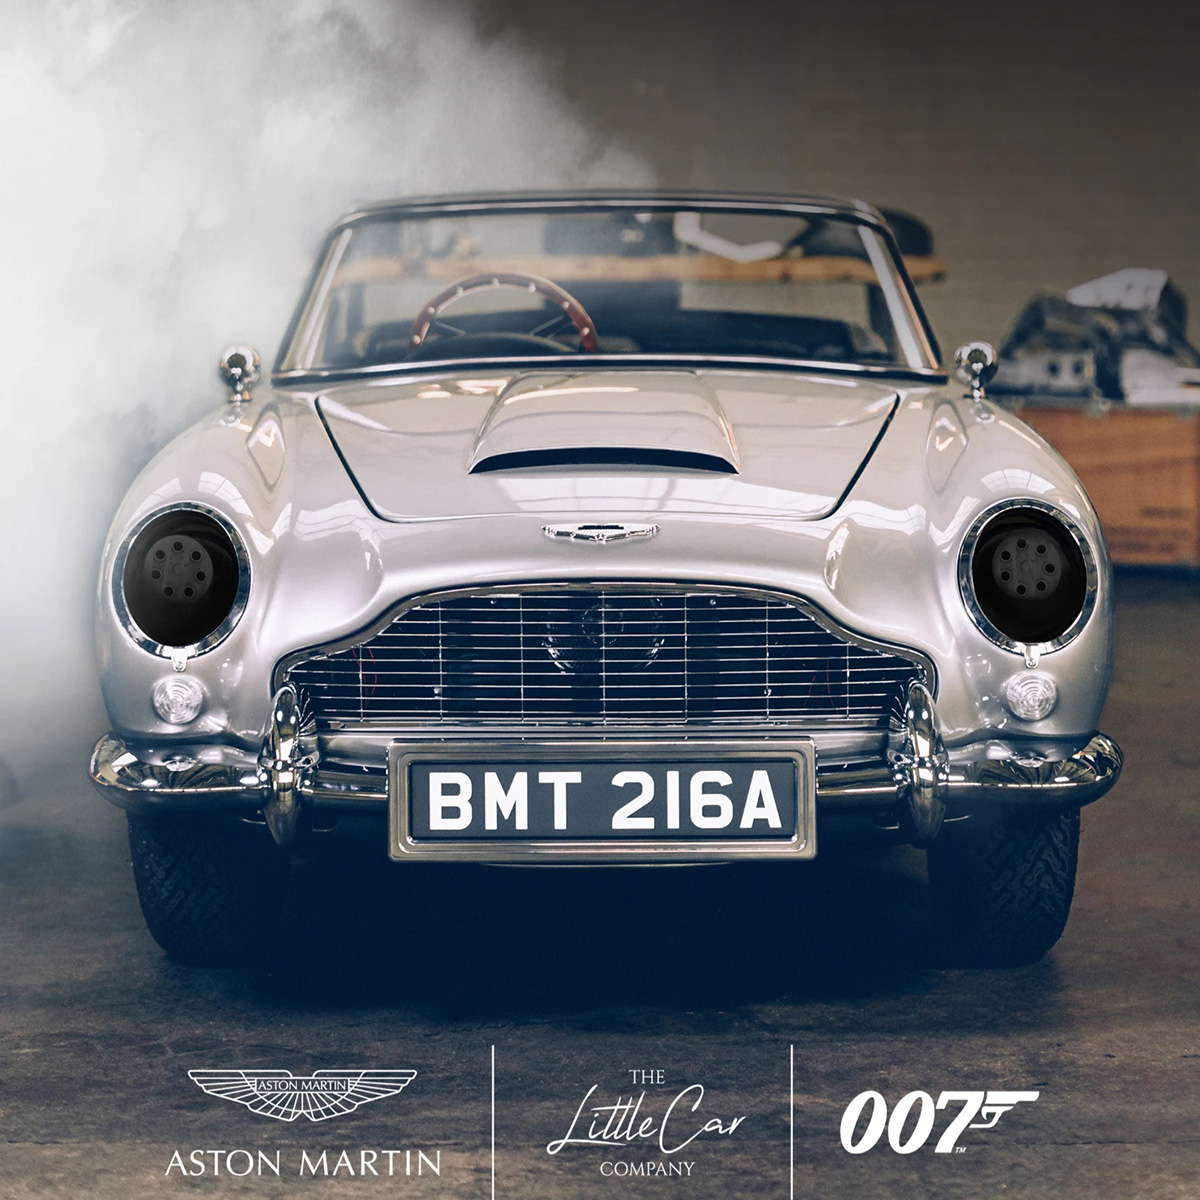 007 James Bond Aston Martin DB5 Junior Car - No Time To Die Edition